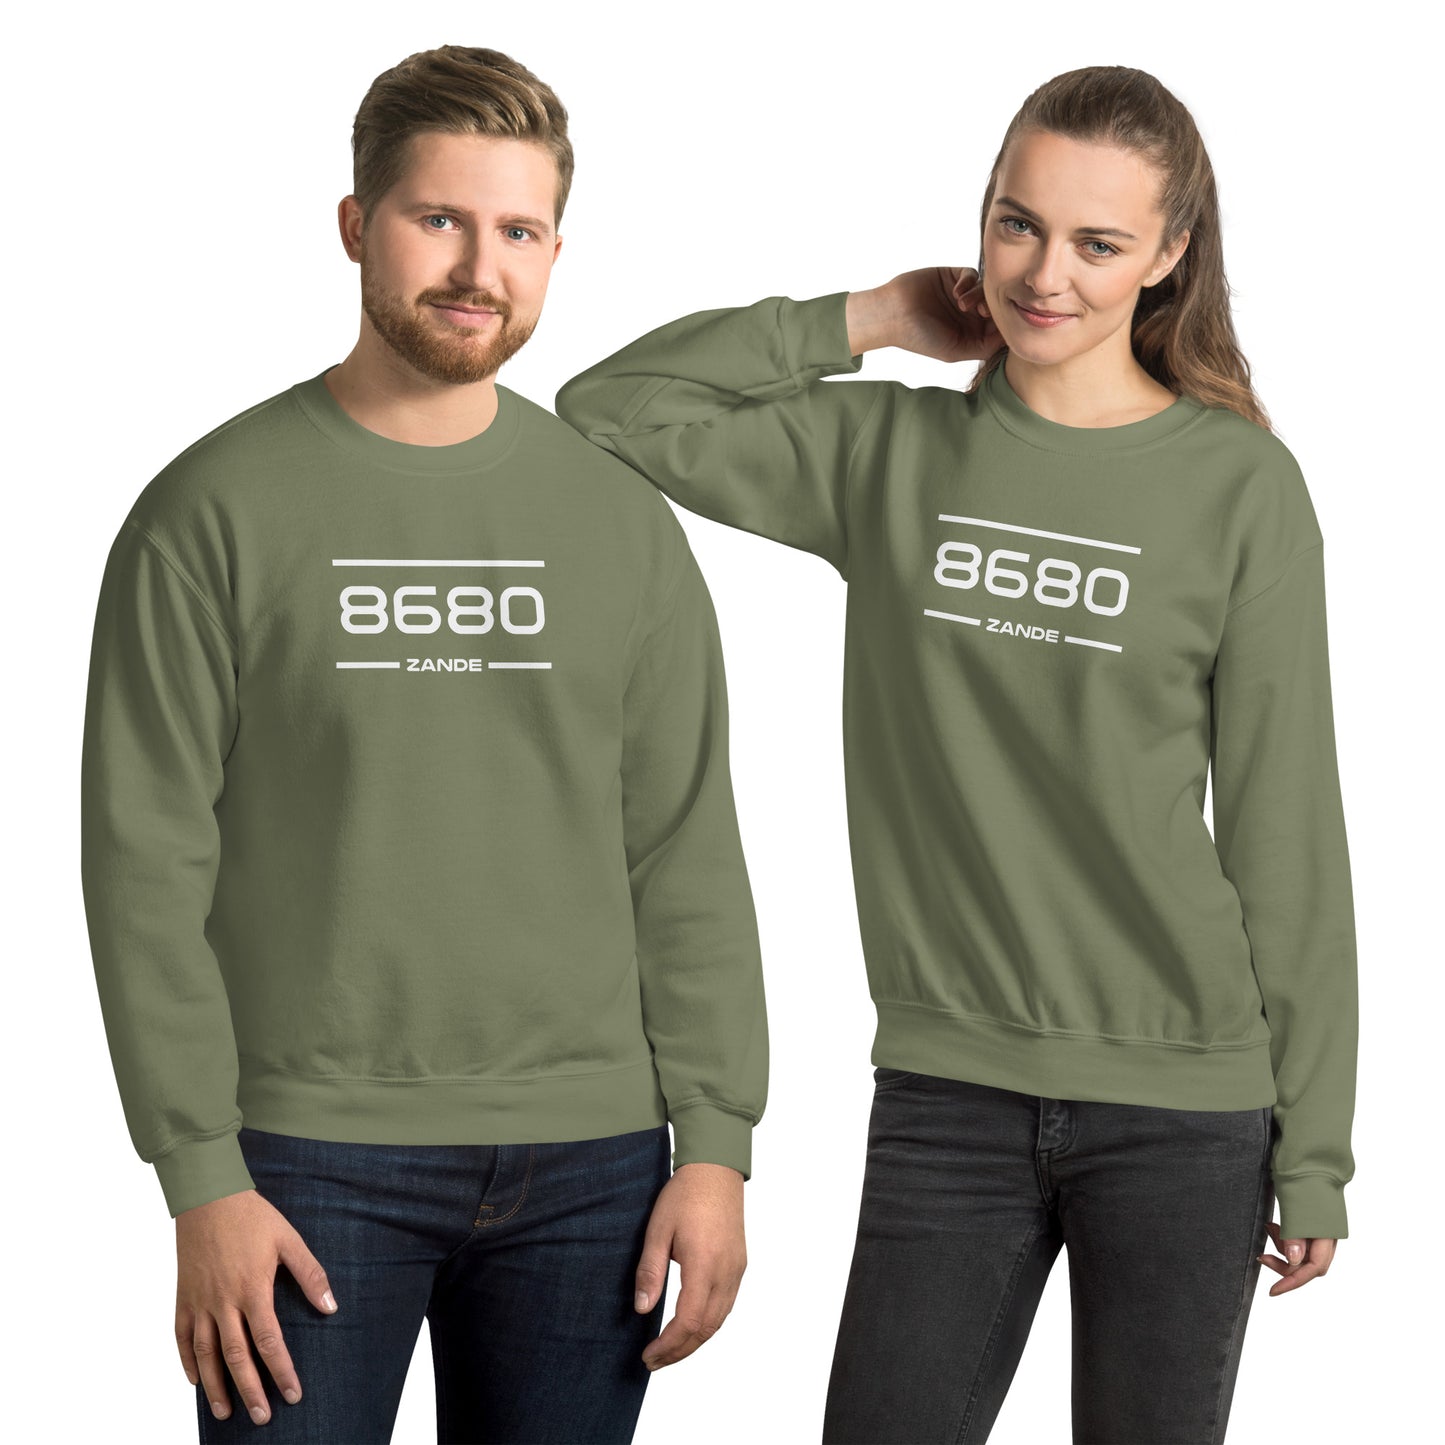 Sweater - 8680 - Zande (M/V)